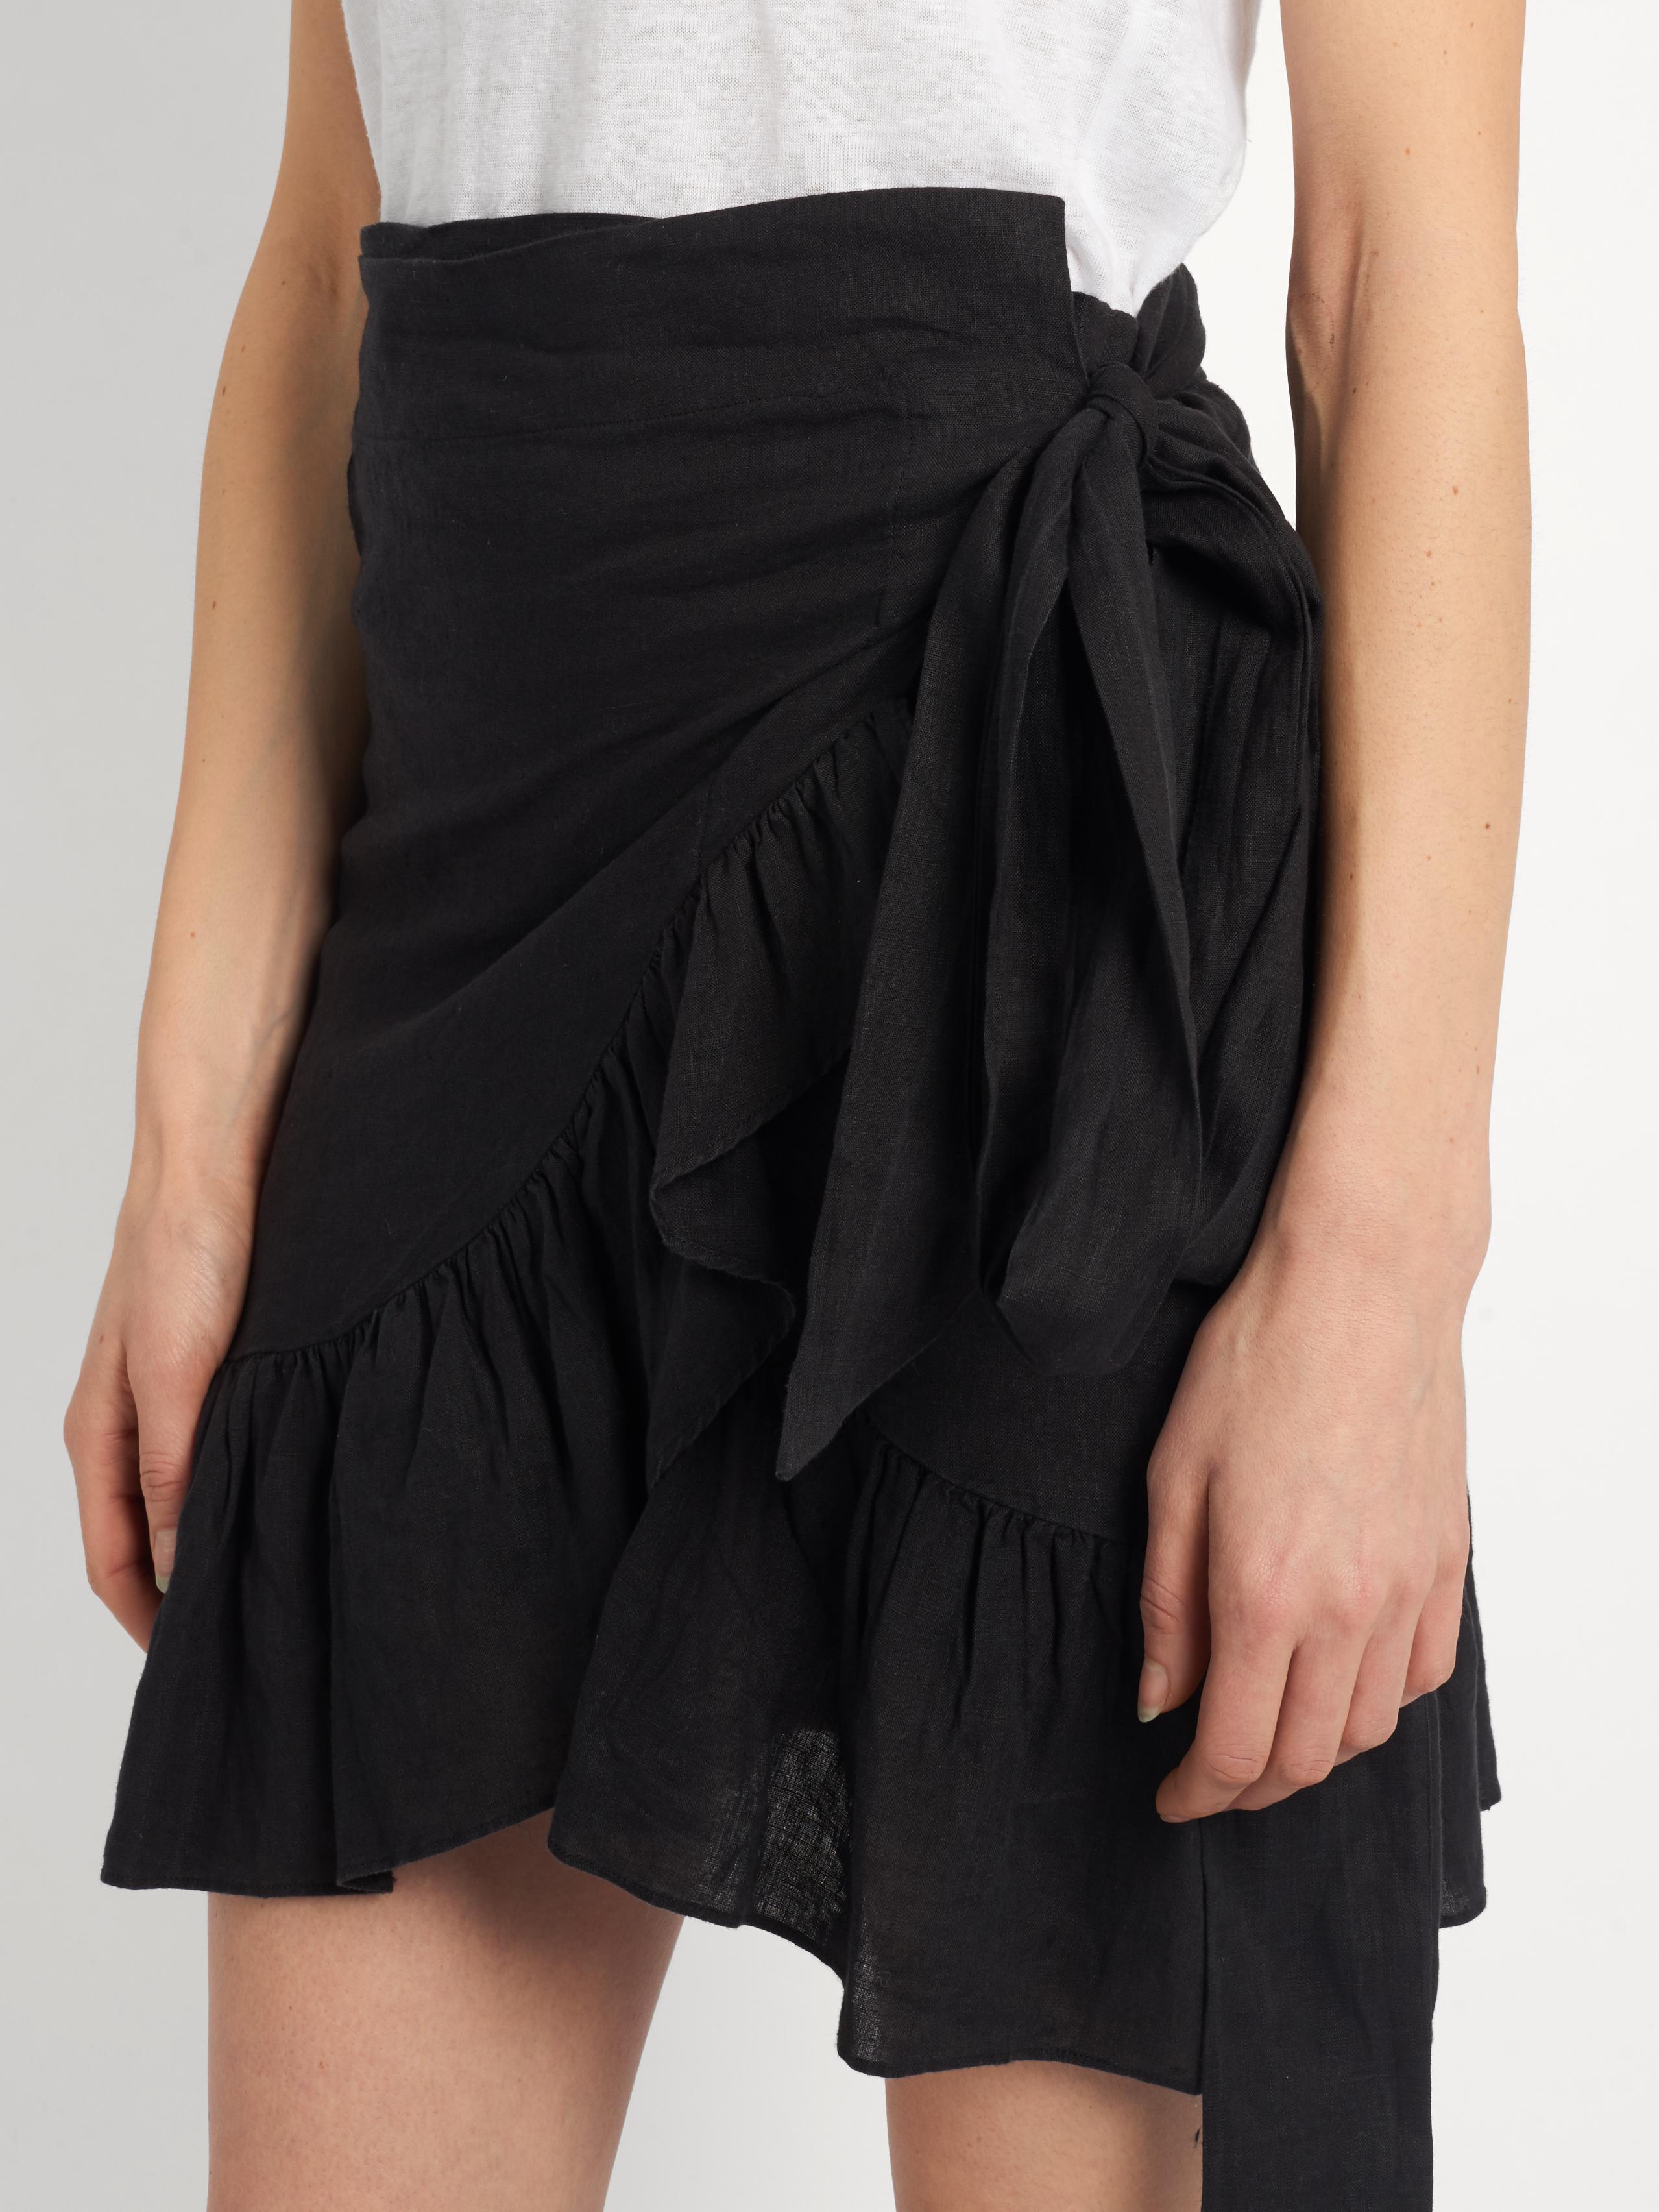 Étoile Isabel Marant Dempster Ruffled Mini Skirt in Black - Lyst